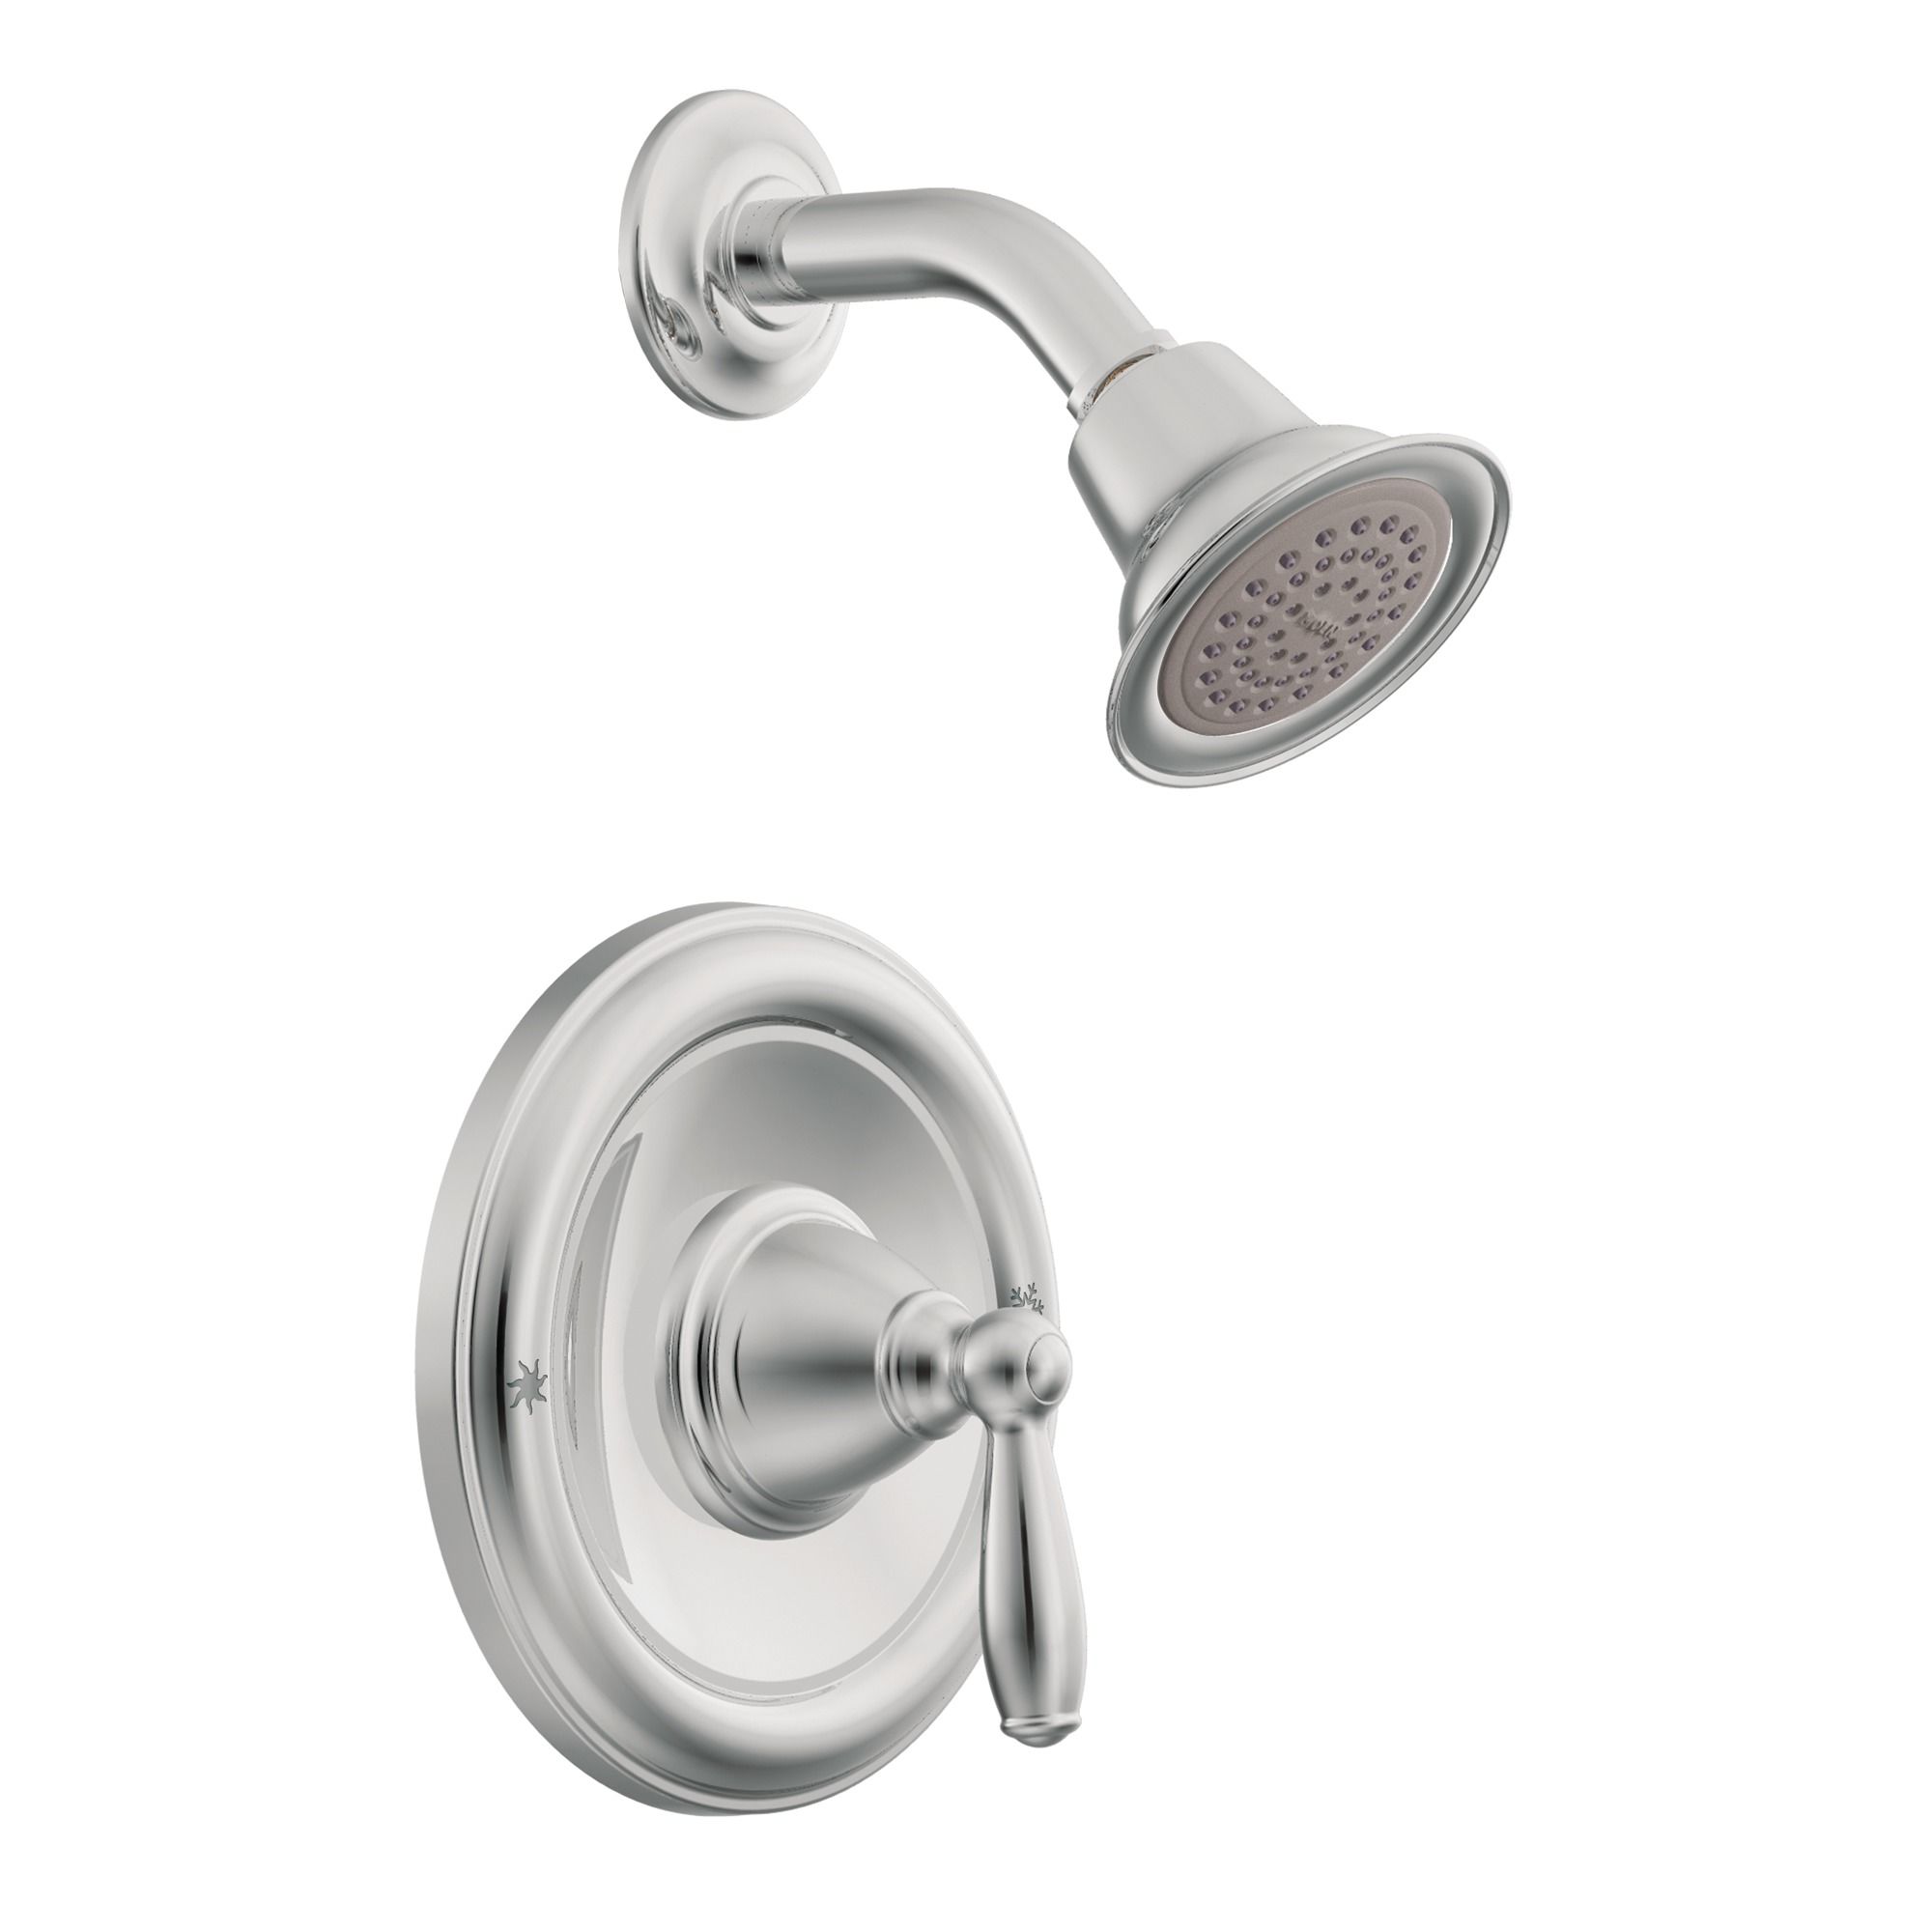 Bathroom Shower Faucet Trim Kit with Spray Showerhead and Single Handle Chrome